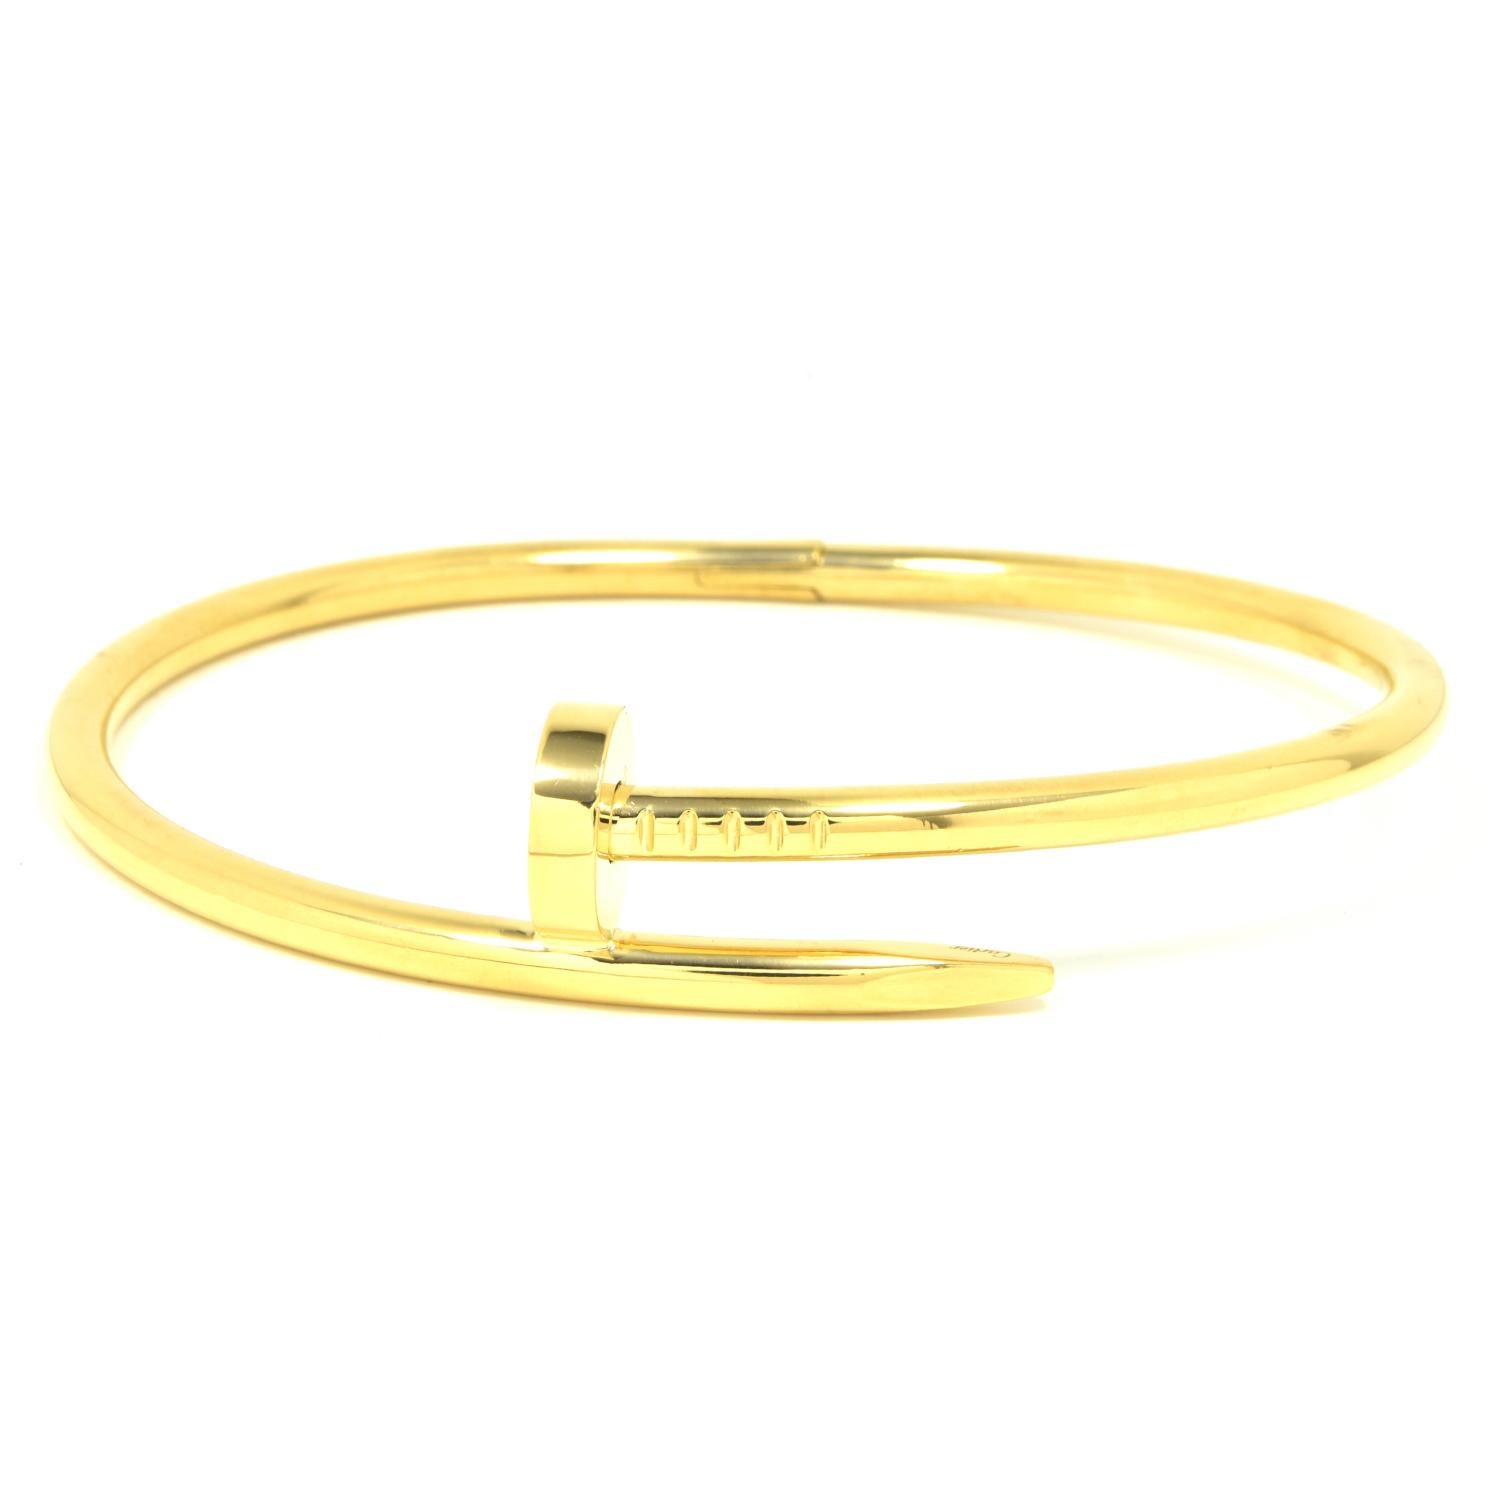 Designer: Cartier

Collection: Juste un Clou “NAIL”

Style: Bangle/Bracelet

Metal: Yellow Gold

Metal Purity: 18k

Bracelet Size:  19 = 19 cm

Screw Style: New Style (Botton)

Signature: Cartier

Hallmarks: Cartier; AU750 ; Serial No.;